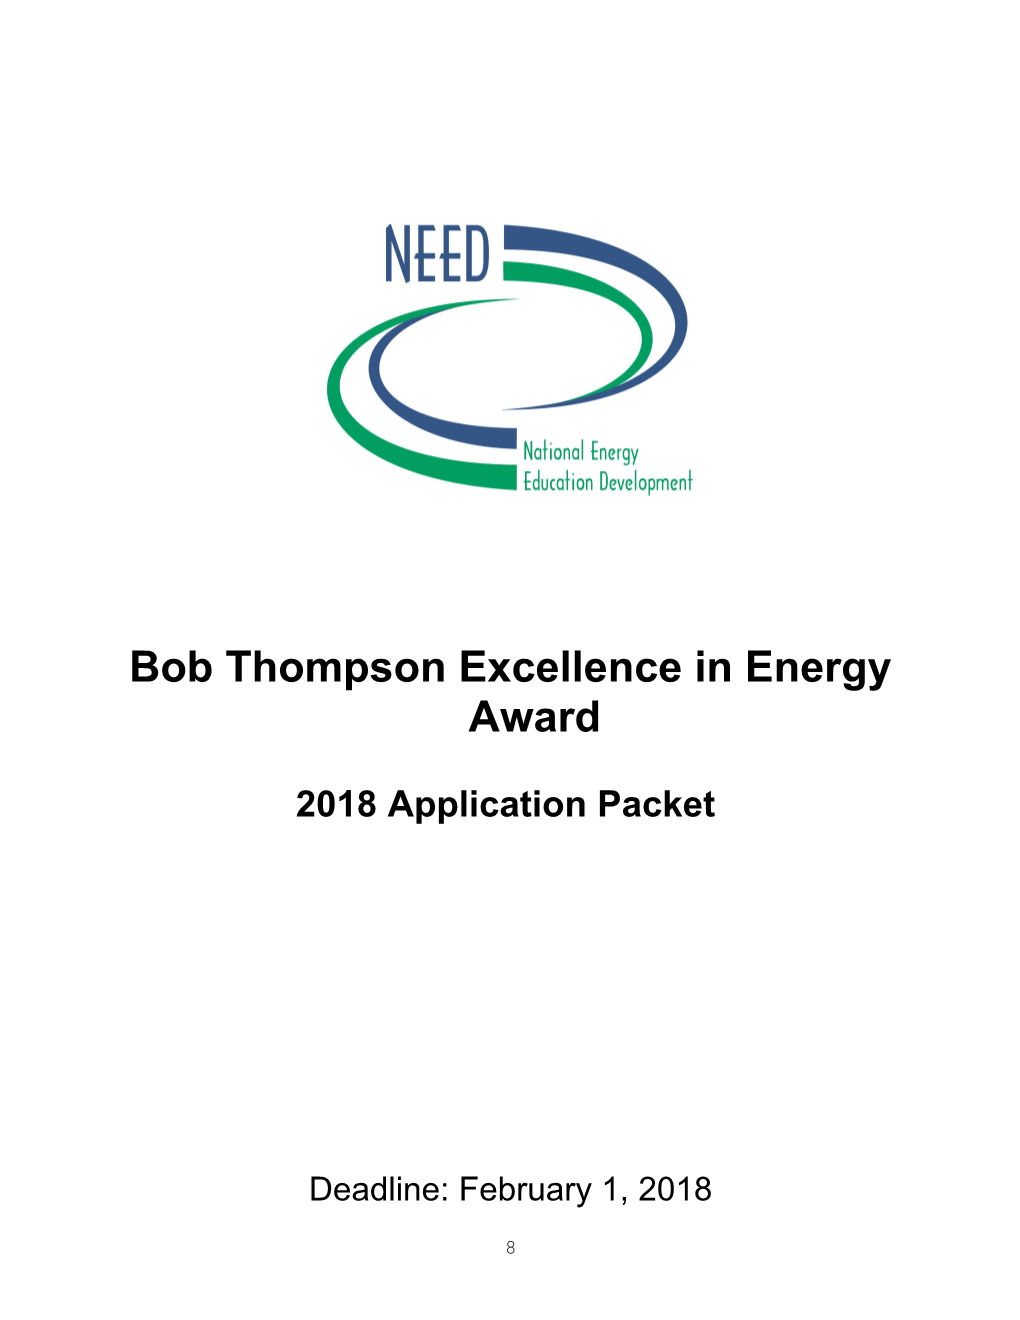 Bob Thompson Excellence in Energy Award